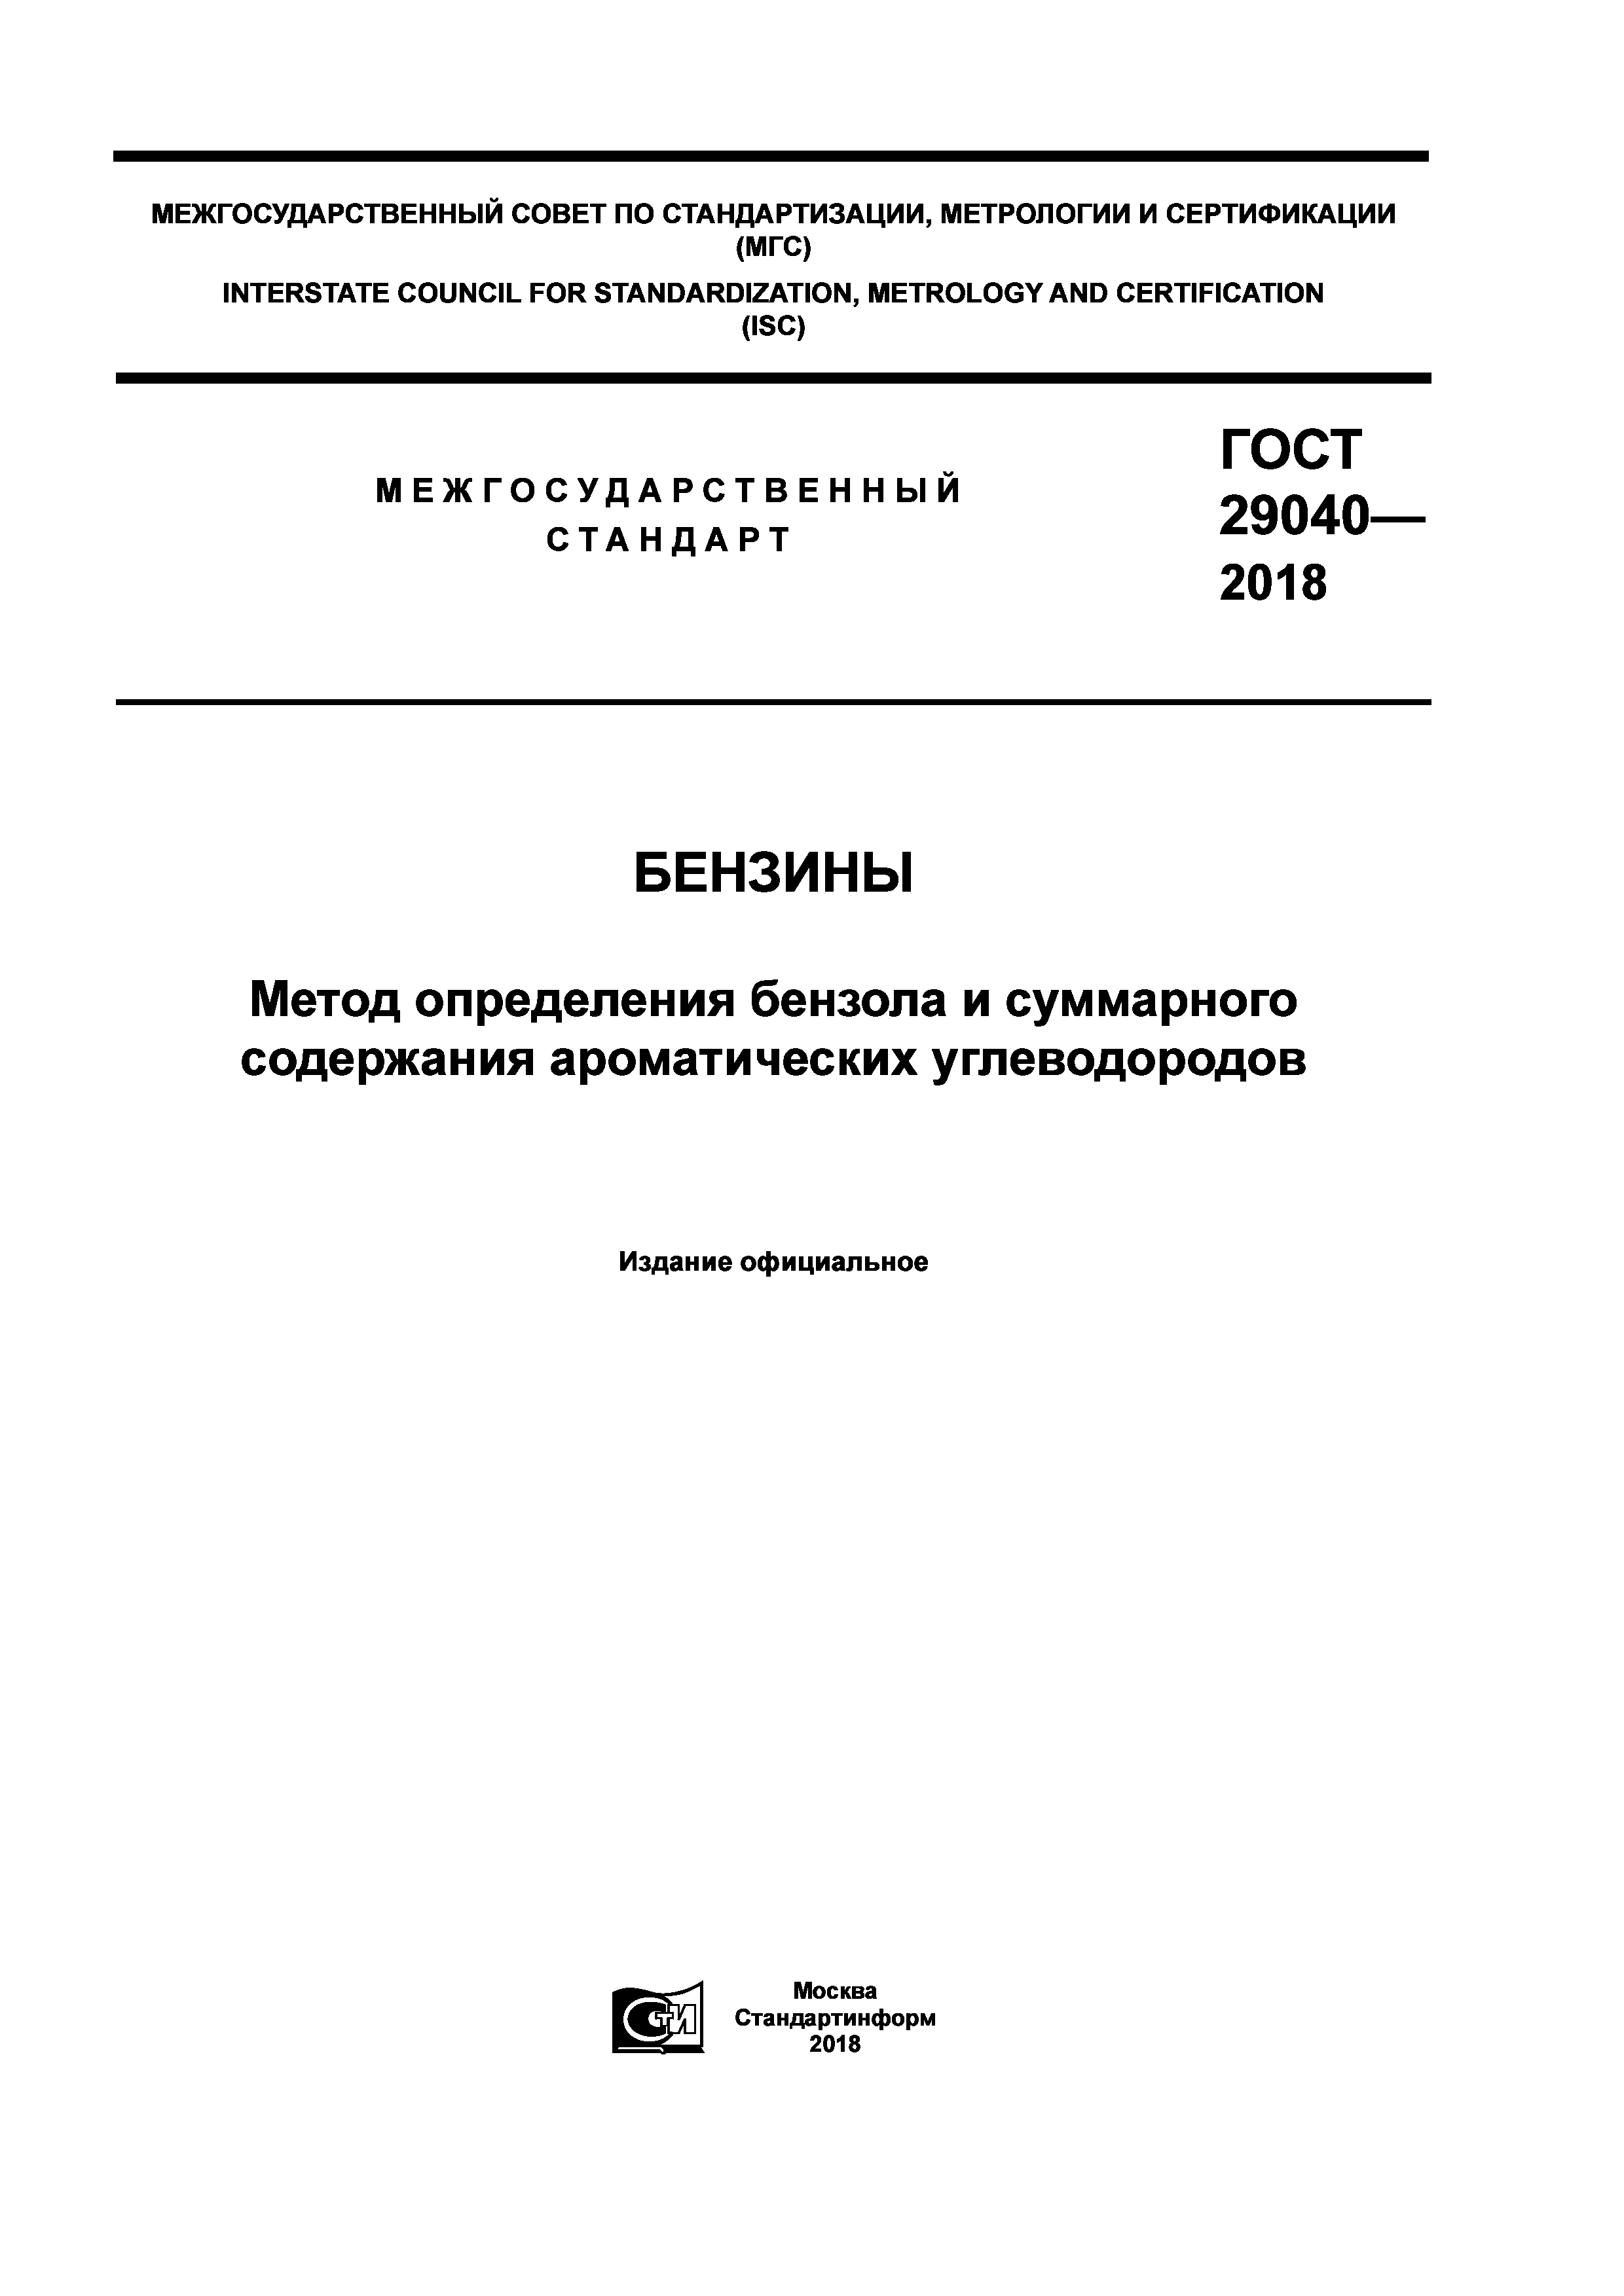 ГОСТ 29040-2018